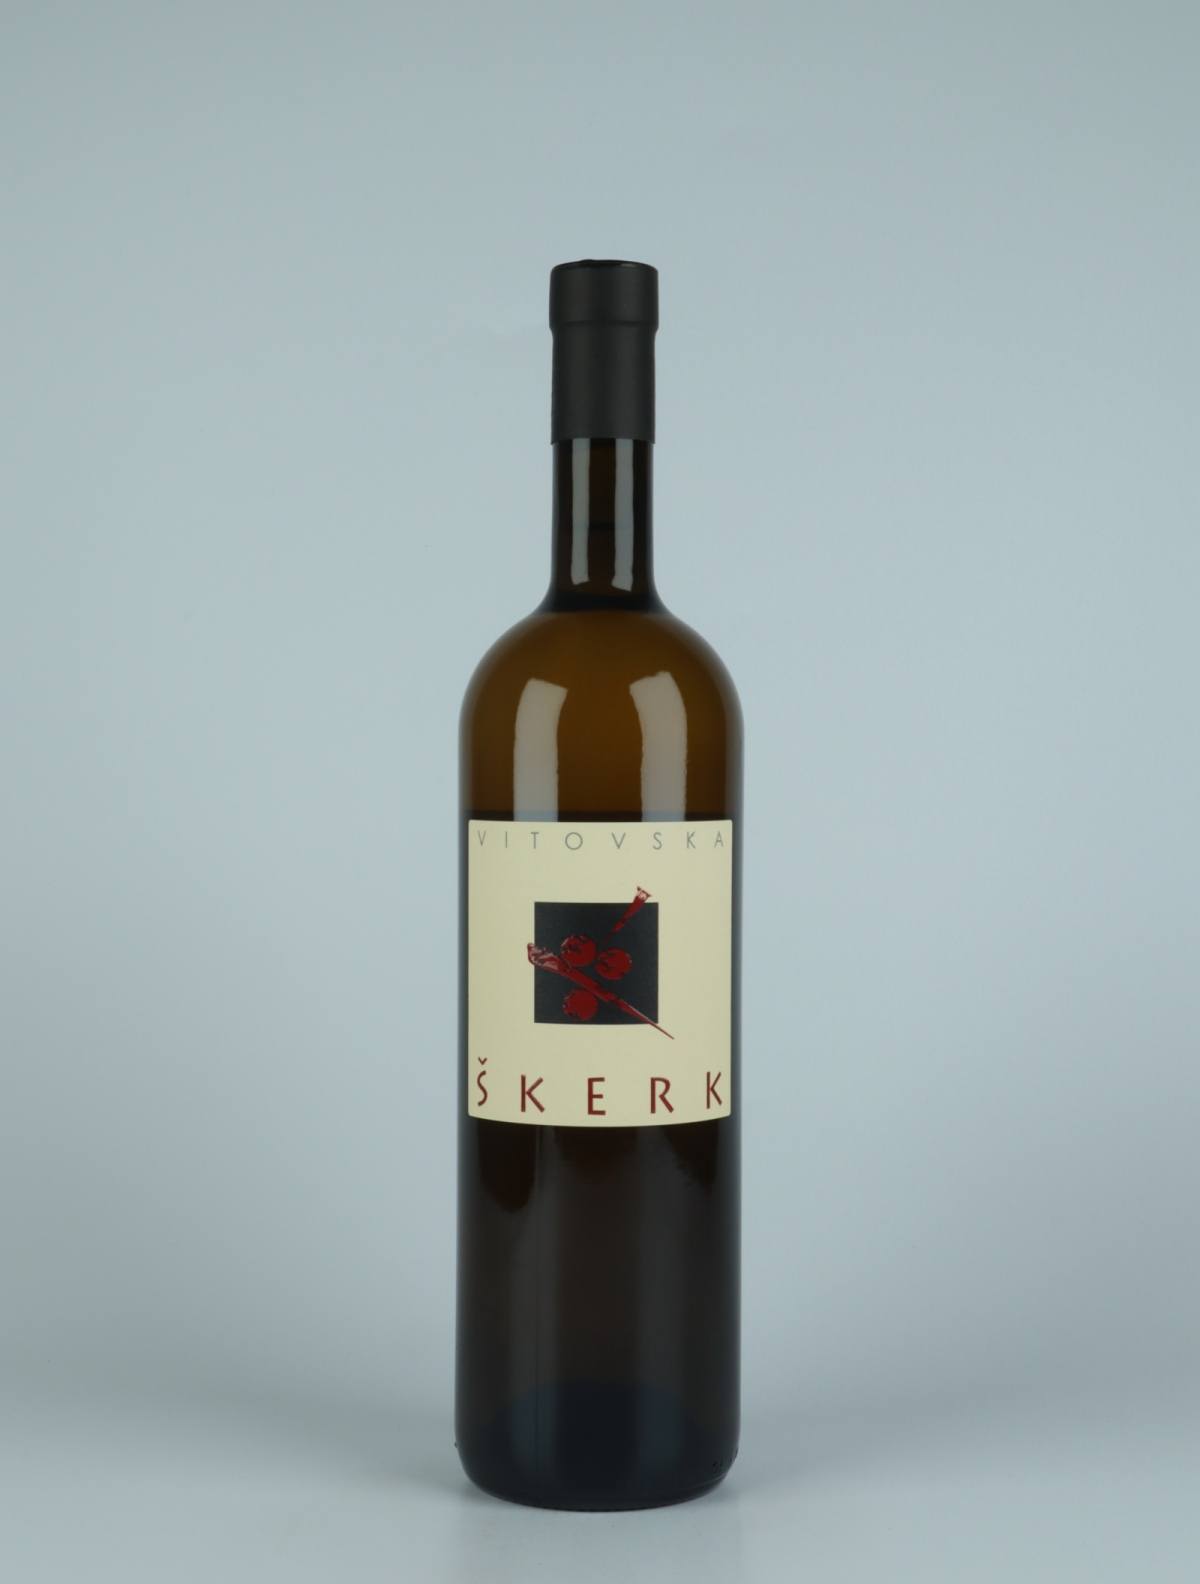 En flaske 2020 Vitovska Orange vin fra Skerk, Friuli i Italien